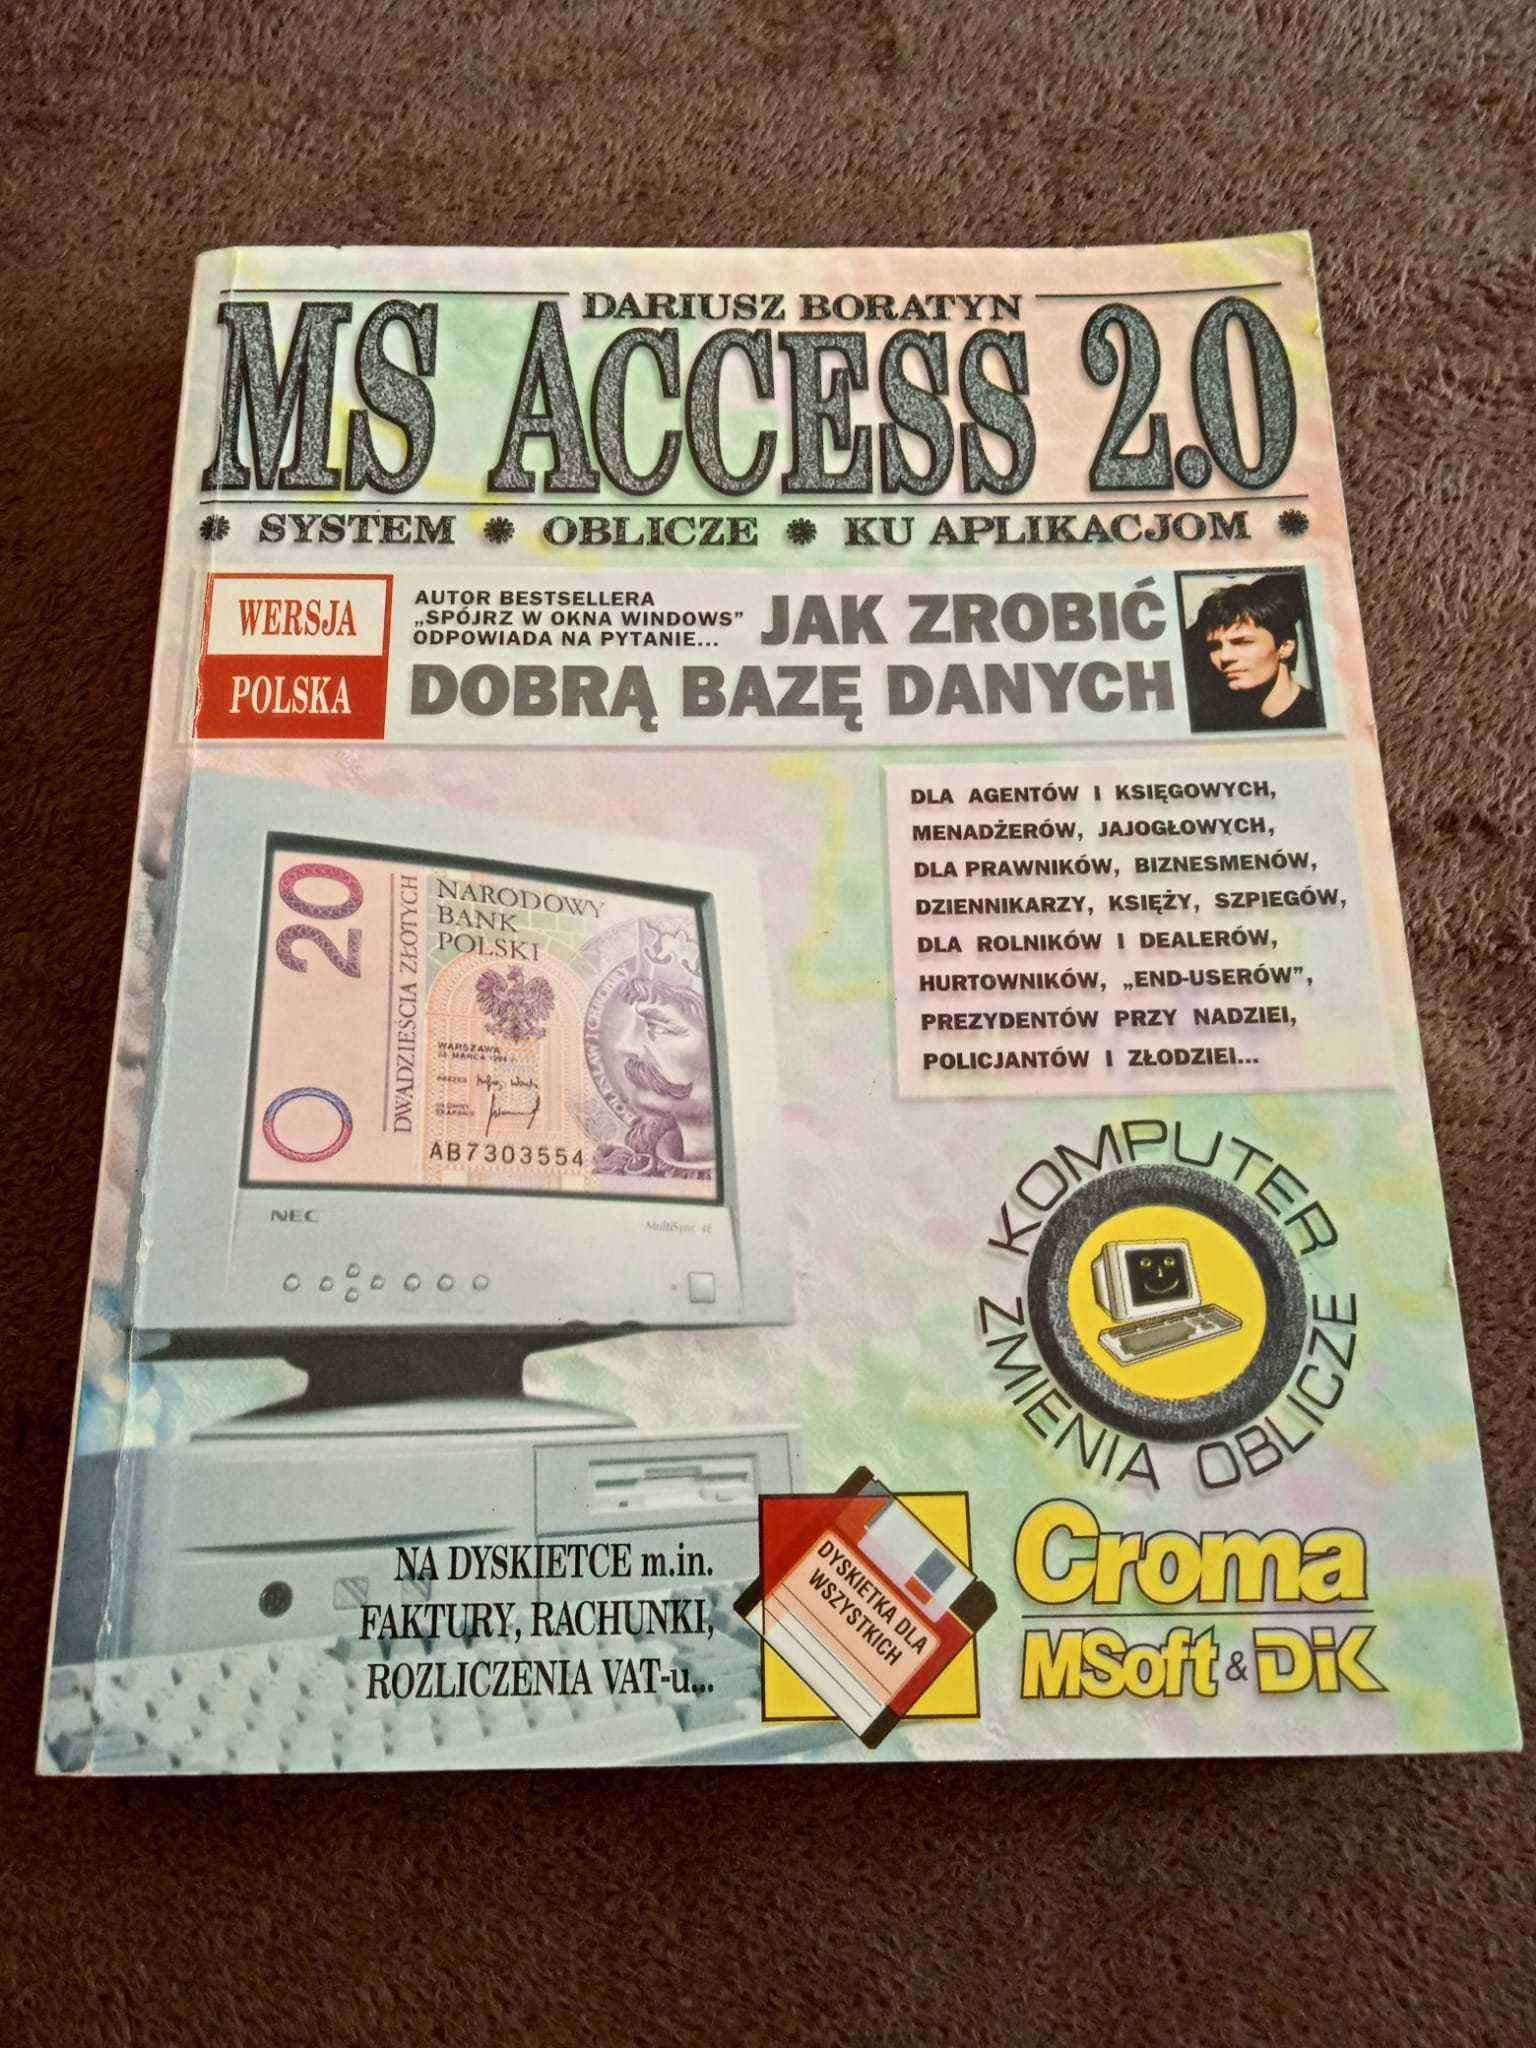 Ms Access 2.0" Dariusz Boratyn